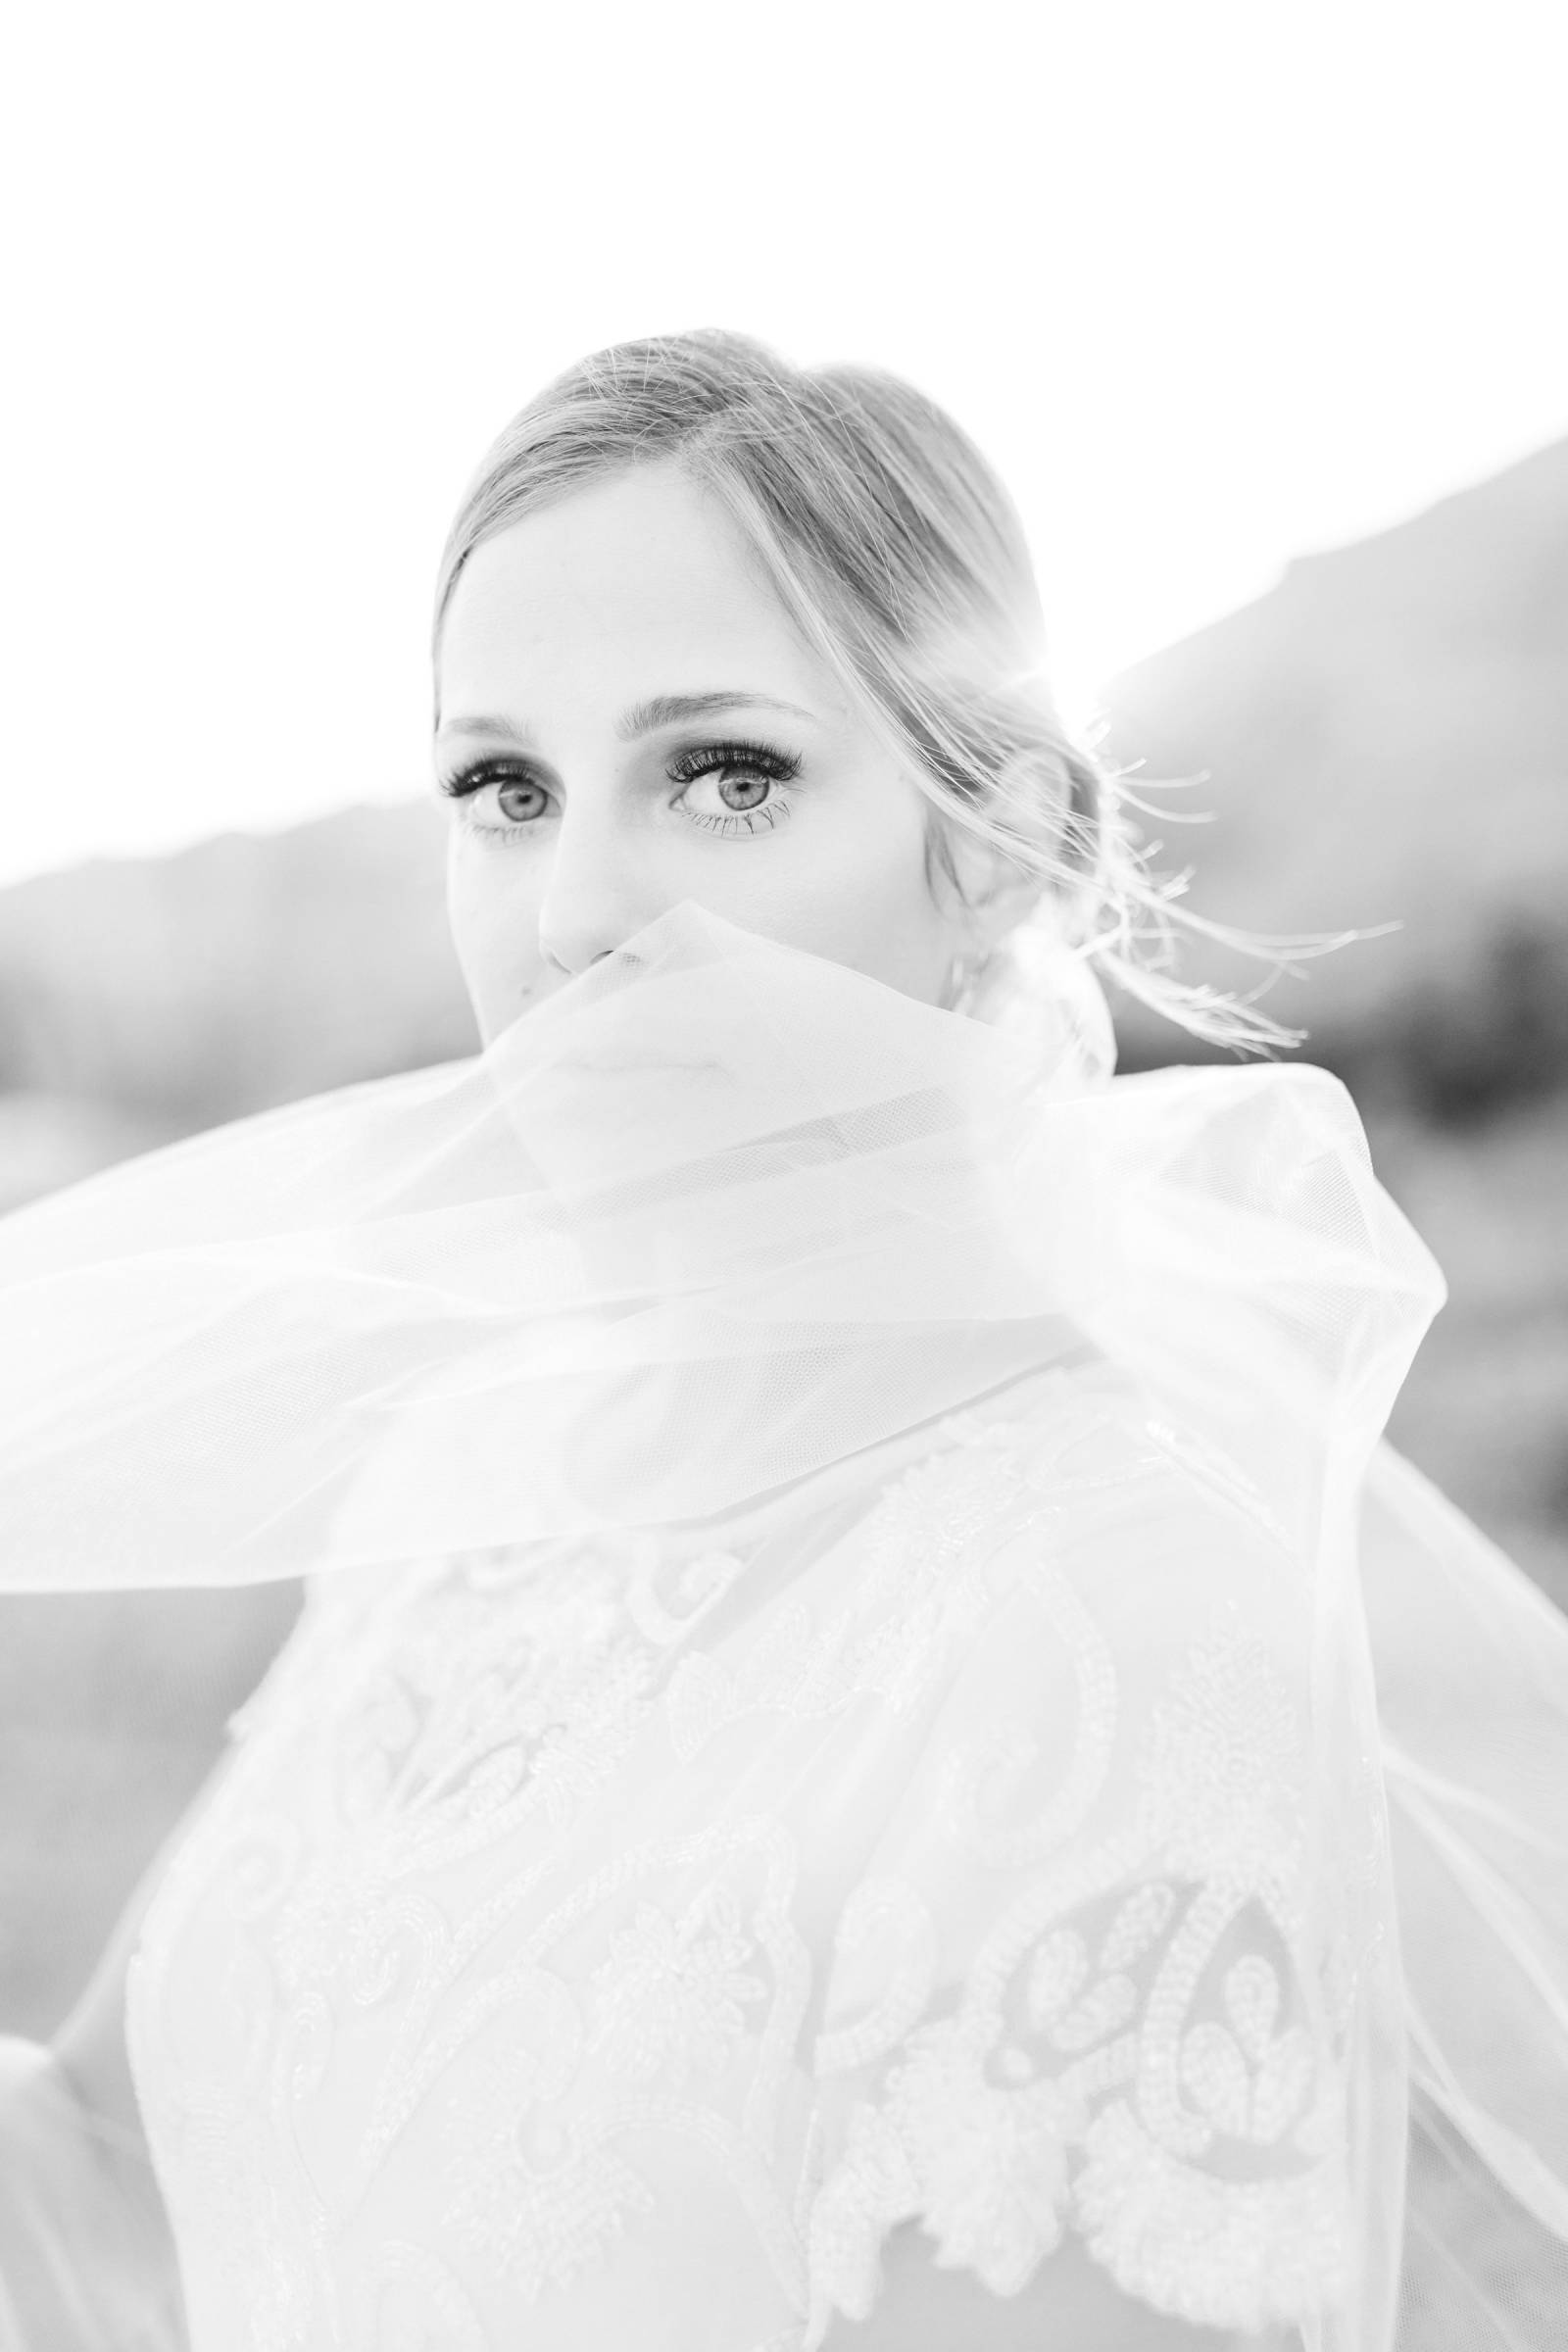 Megan + Joseph's Stunning Canyon Bridal Shoot